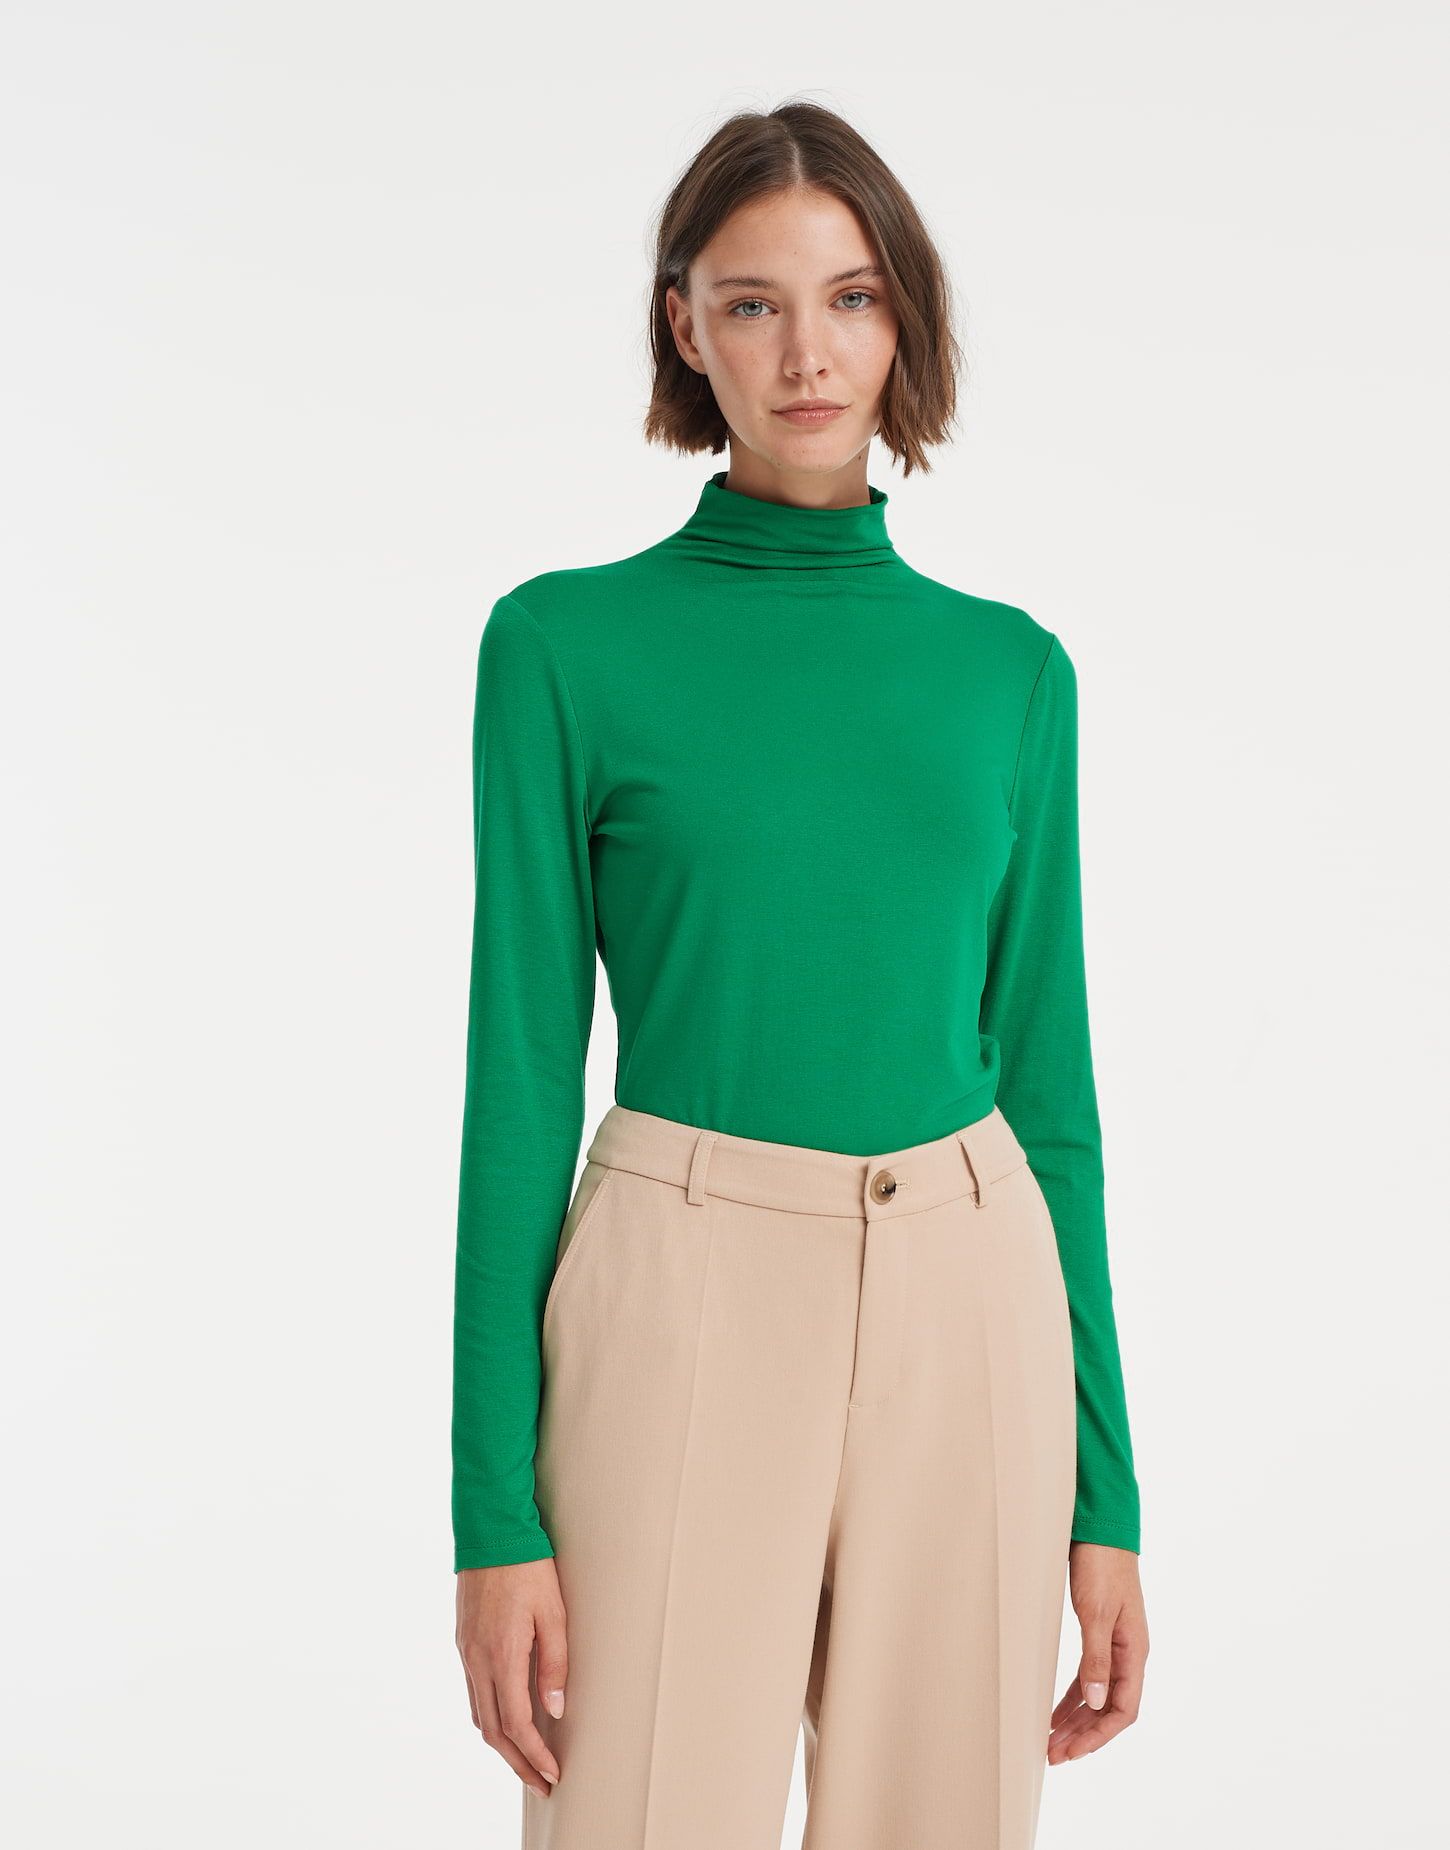 bestellen green Henri\'s OPUS | sayar tulip T-shirt Fashion online